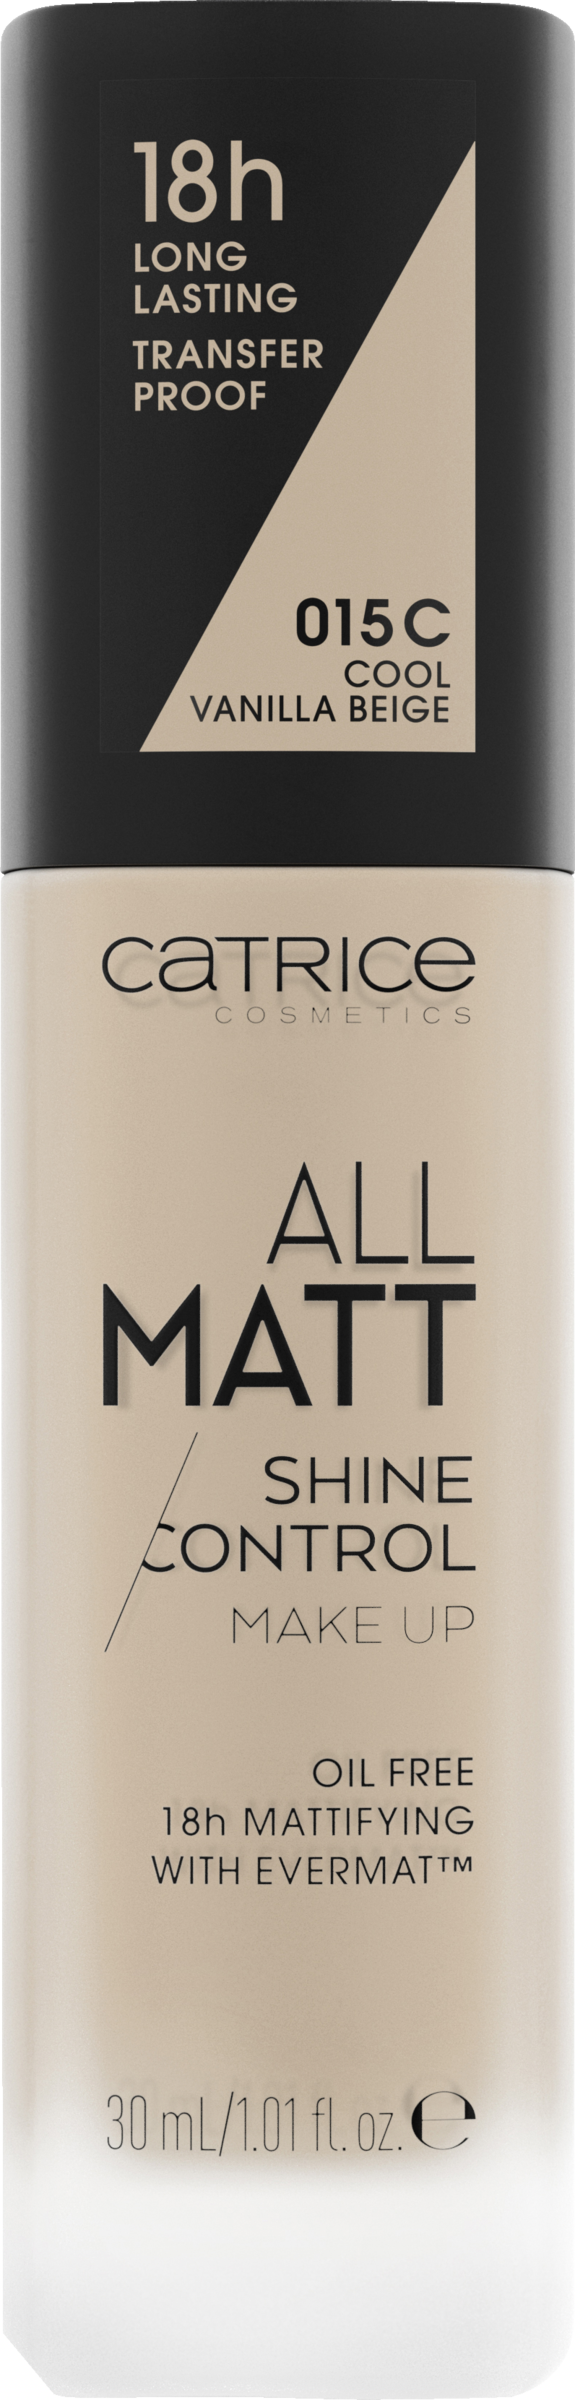 Catrice All Matt Shine Control Make Up 015 C